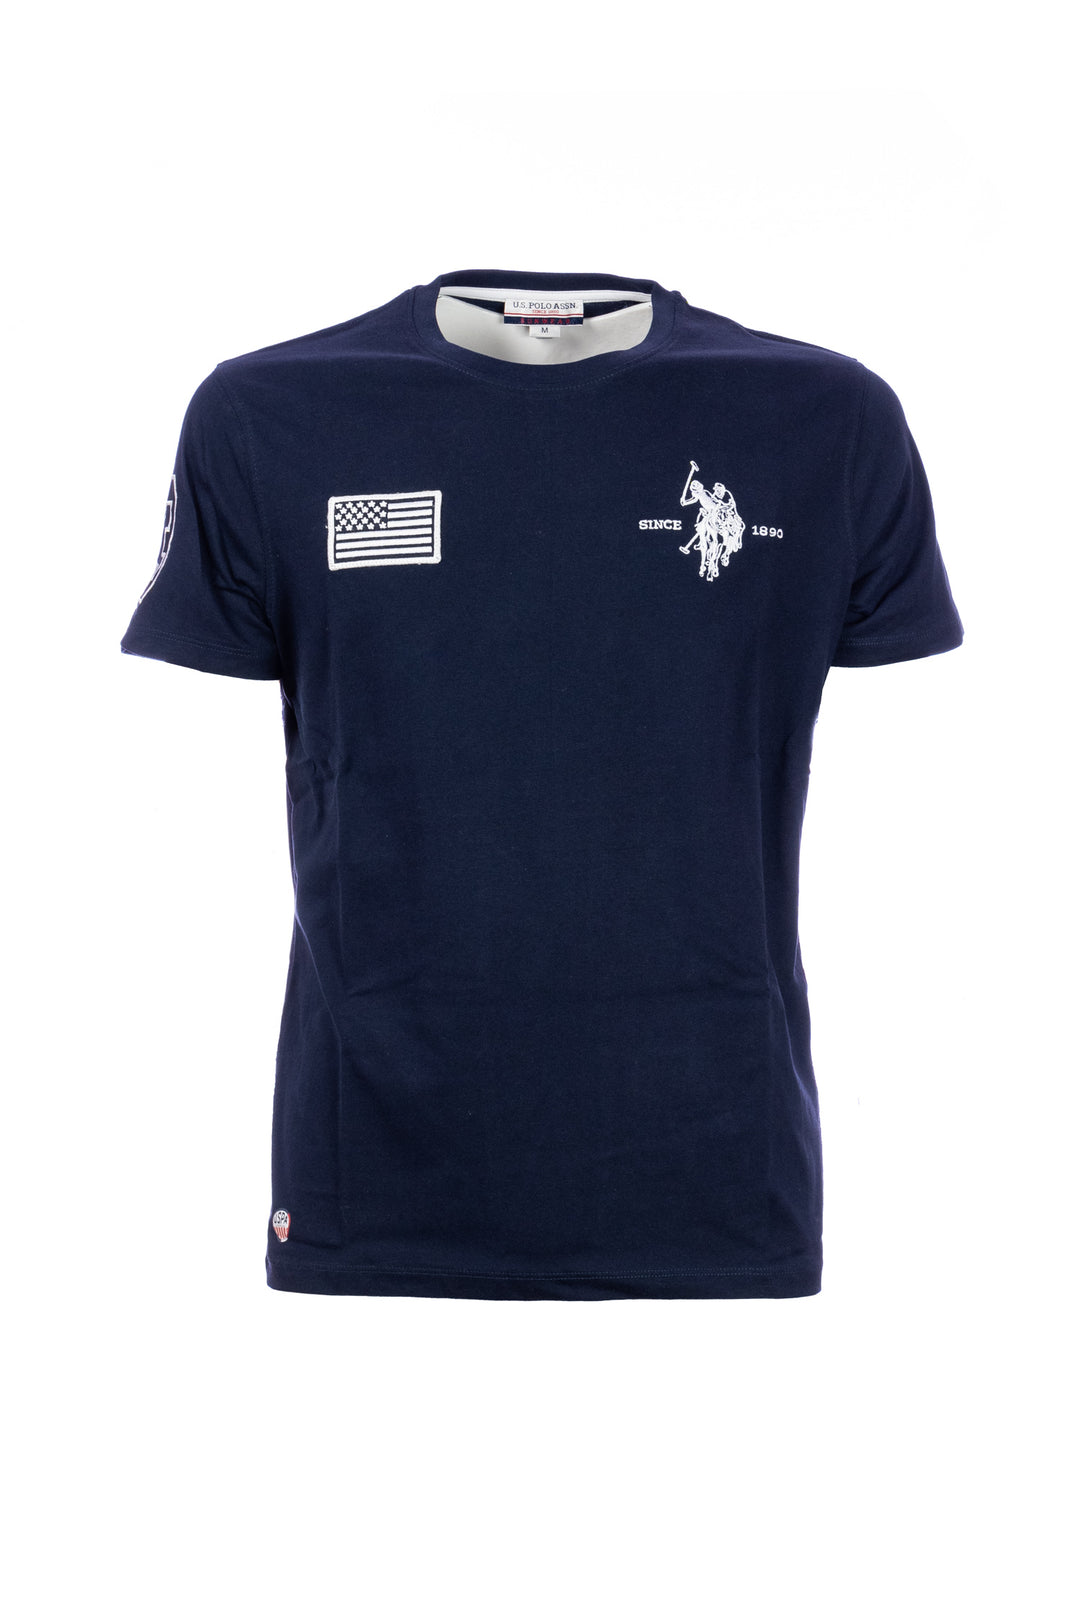 U.S. POLO ASSN. BEACHWEAR T-shirt blu navy in cotone con logo e bandiera USA ricamati - Mancinelli 1954